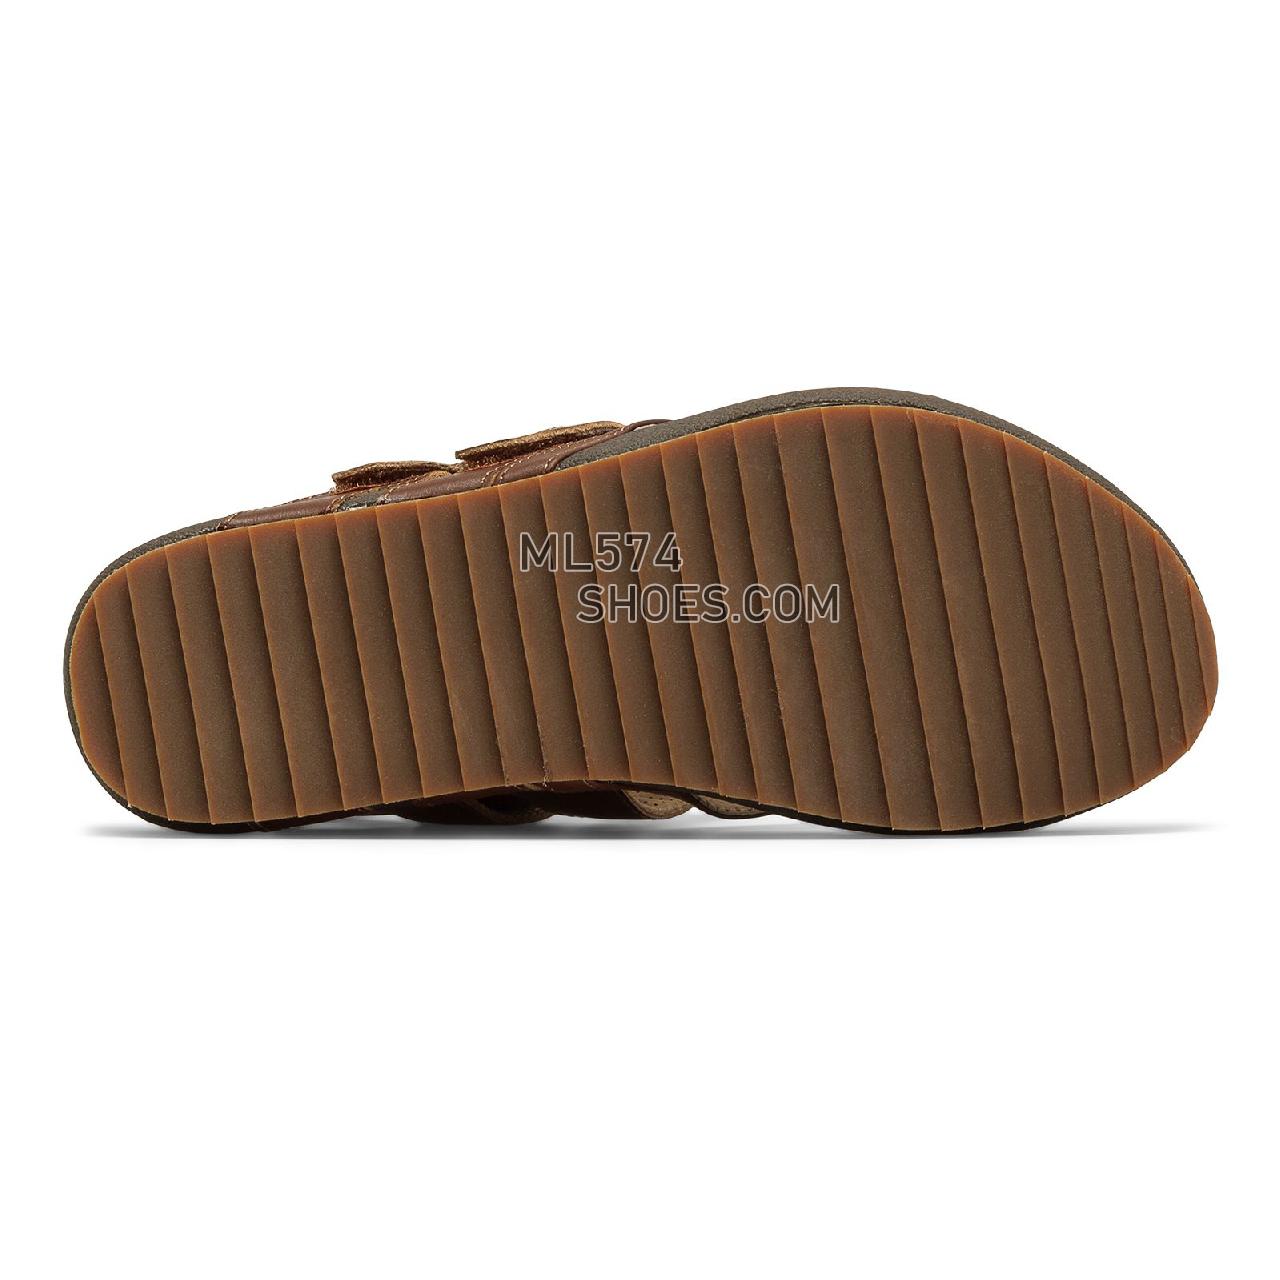 New Balance Traveler Sandal - Women's 3101 - Sandals Brown - WR3101WSK